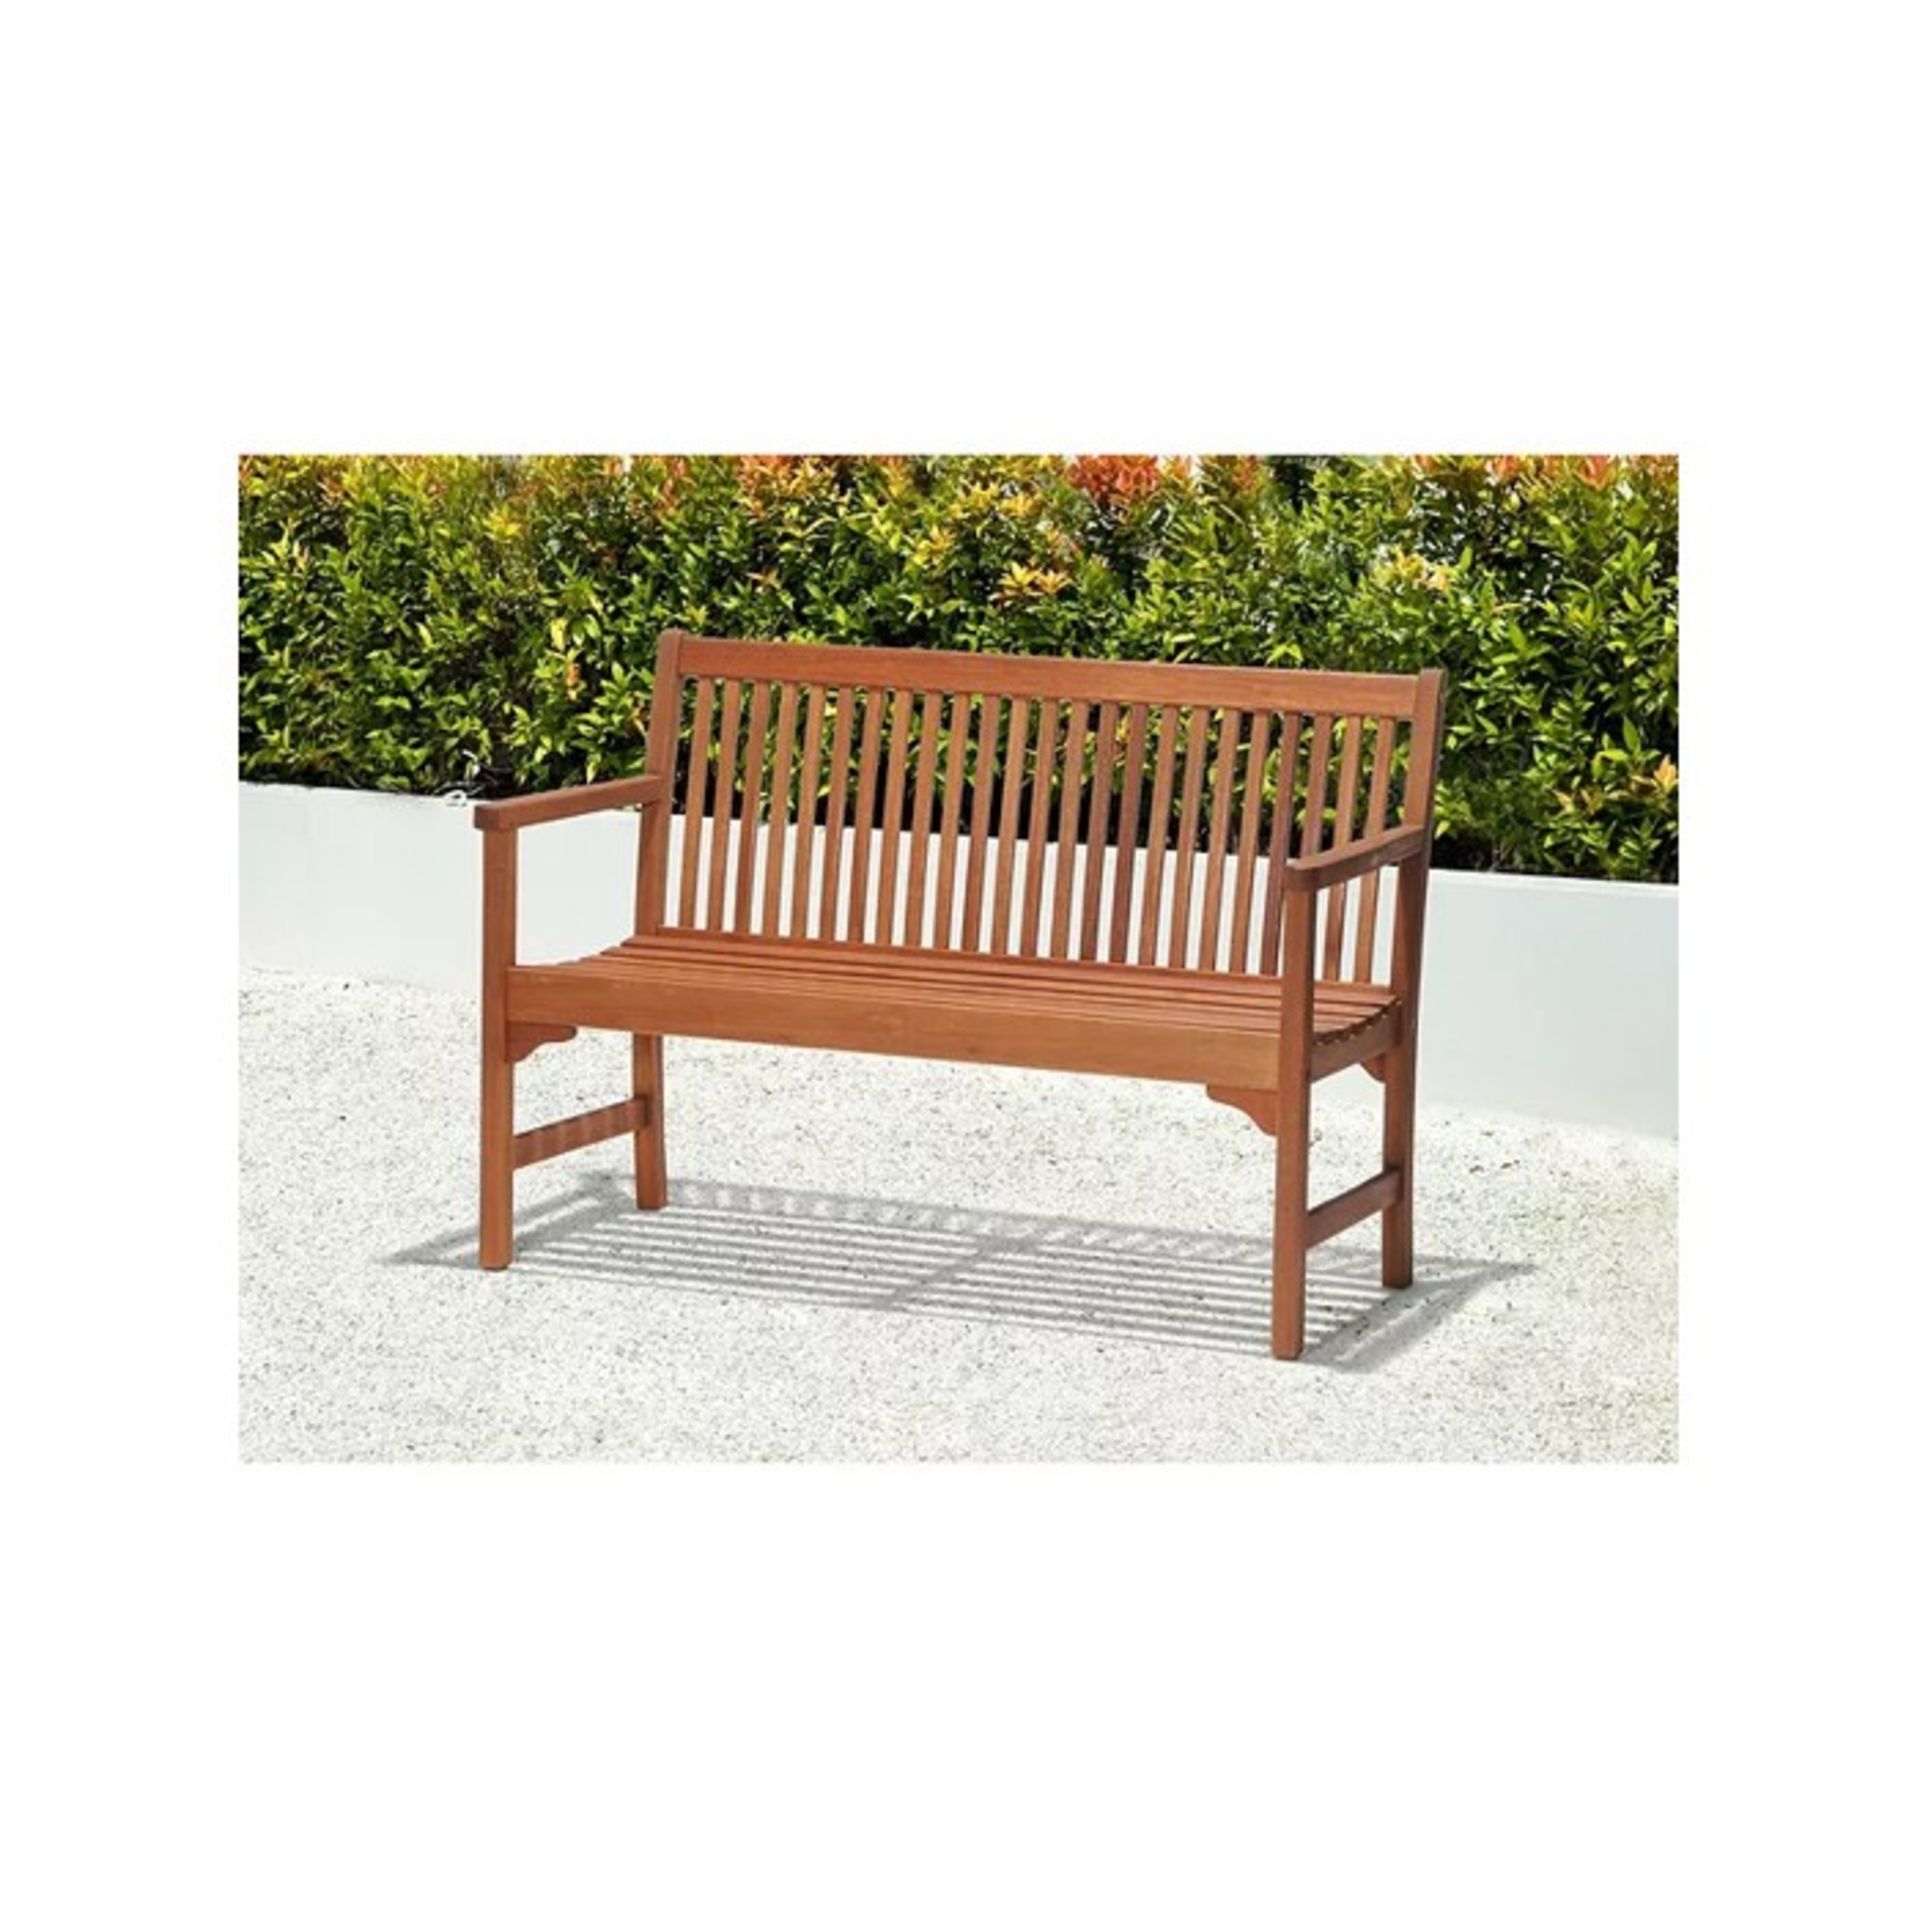 BRAND NEW JOHN LEWIS 2-Seater Garden Bench, FSC-Certified (Eucalyptus Wood), Natural. RRP £253.50.